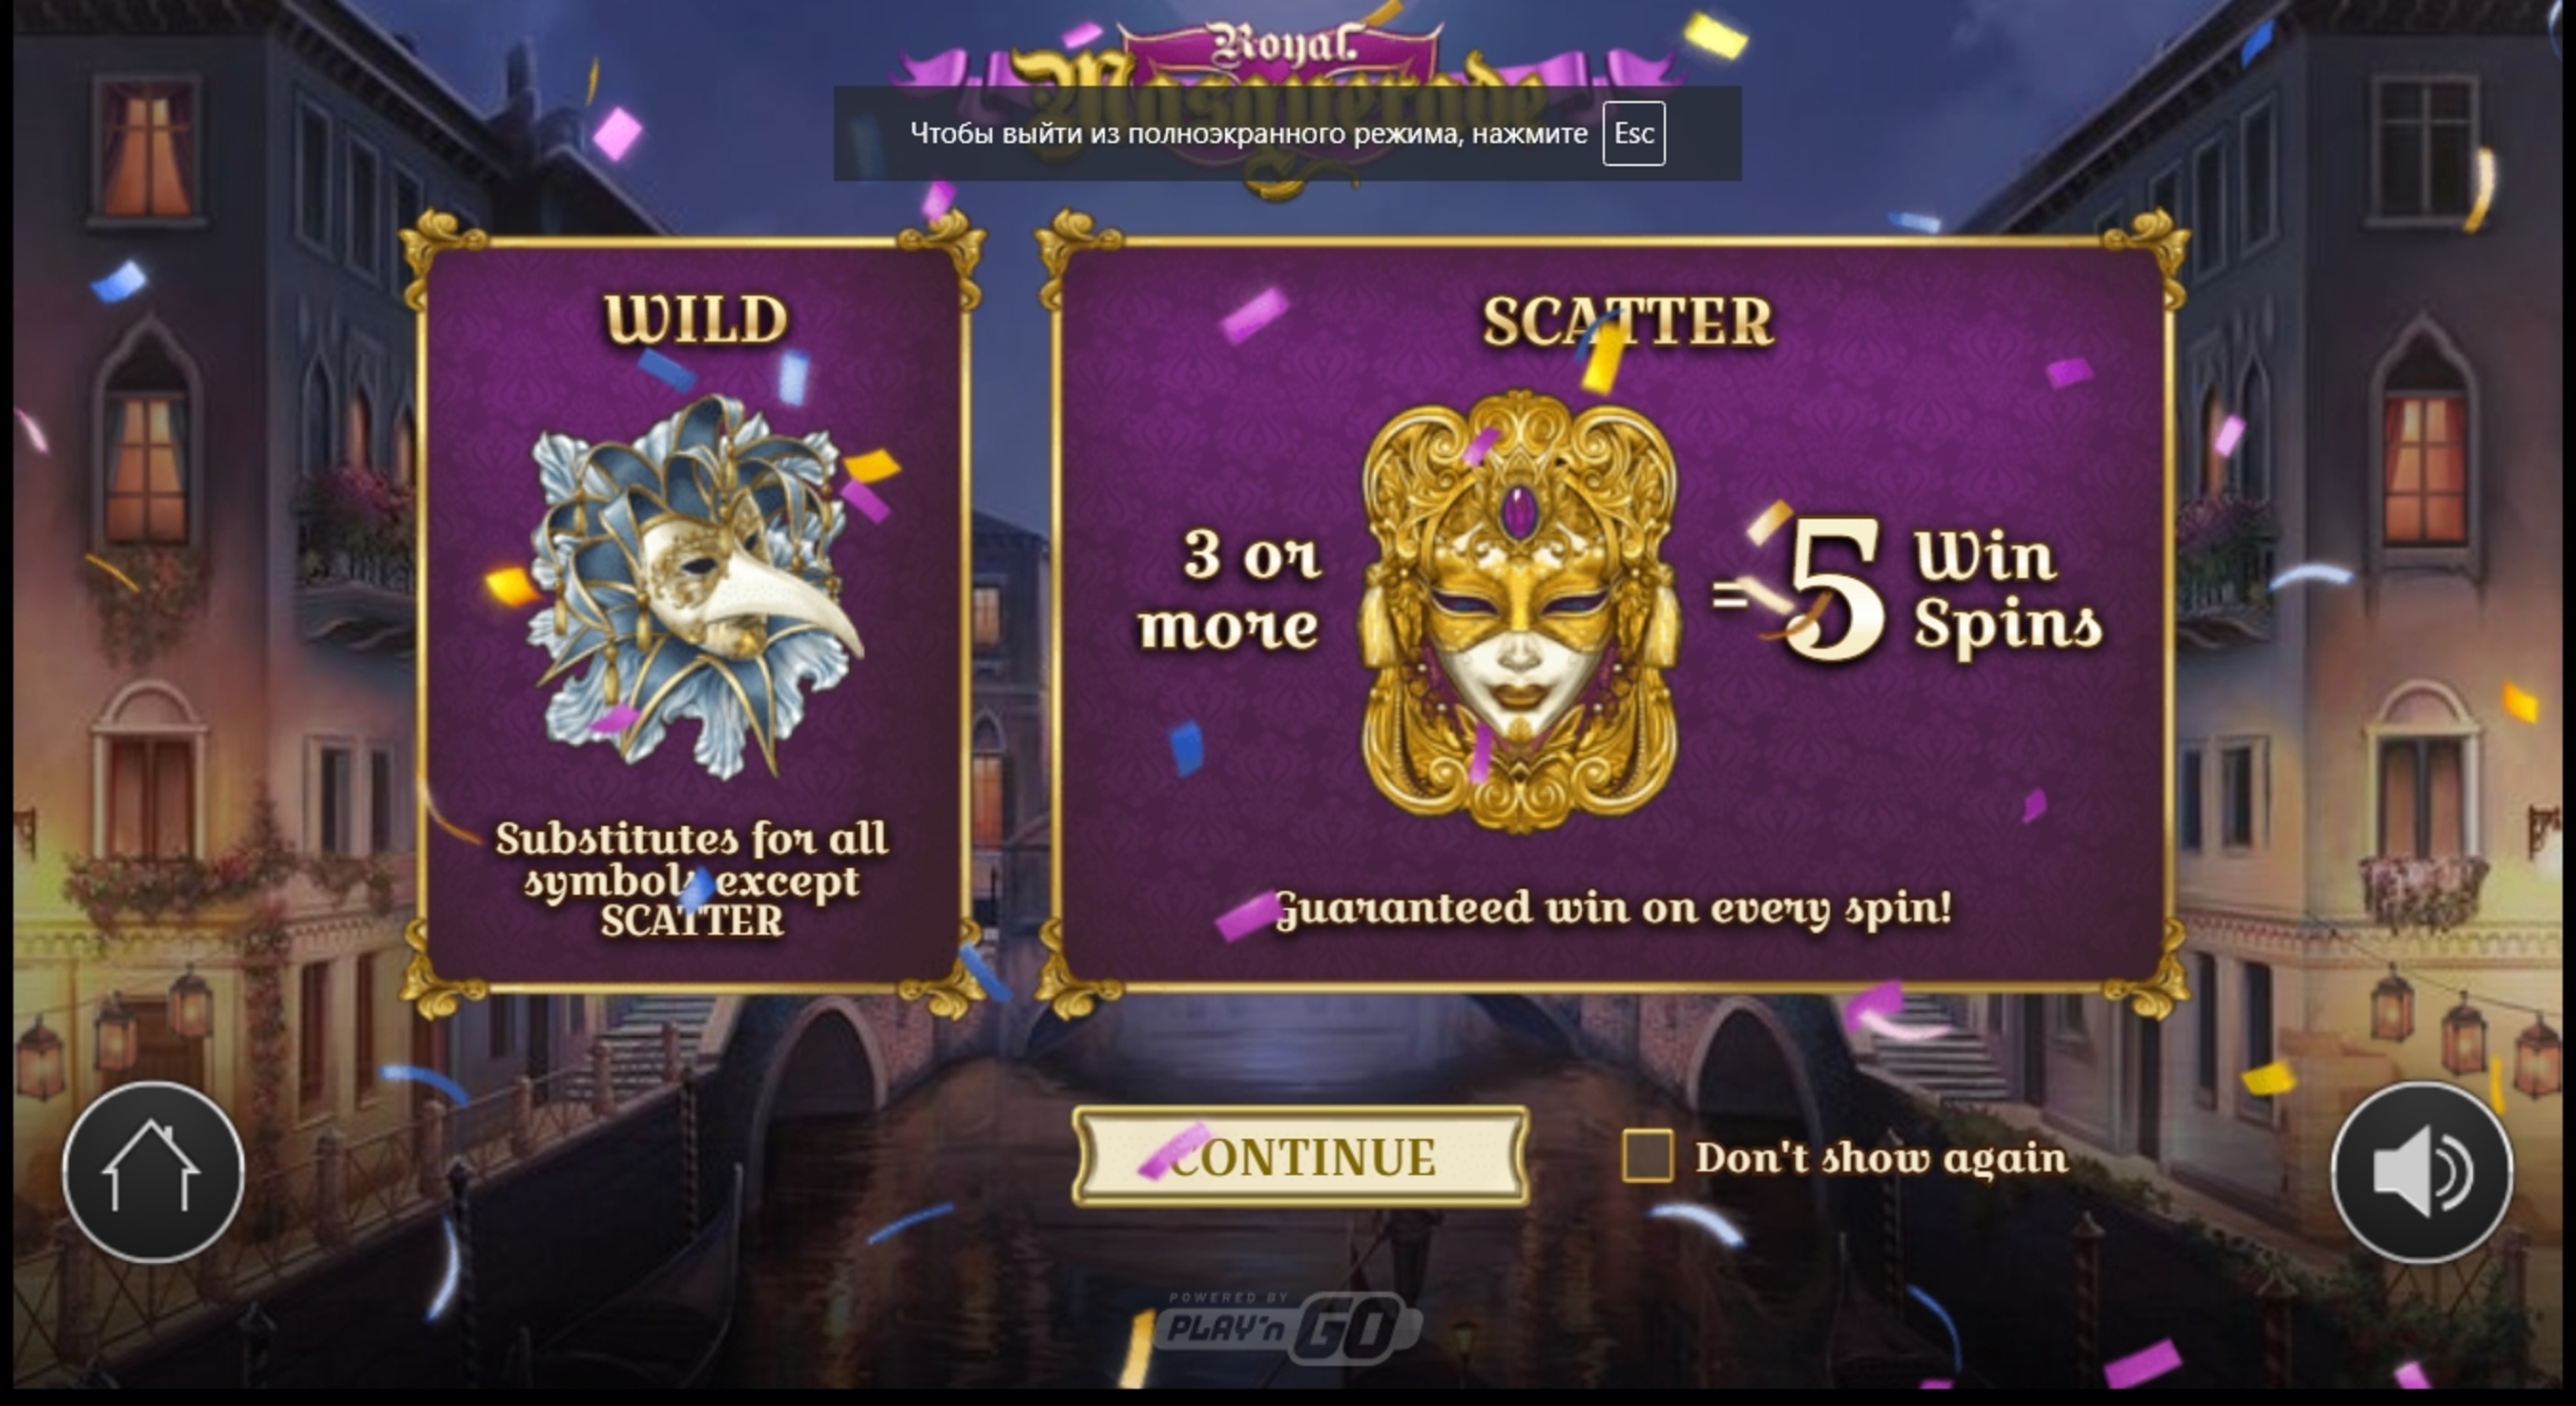 Play Royal Masquerade Free Casino Slot Game by Playn GO